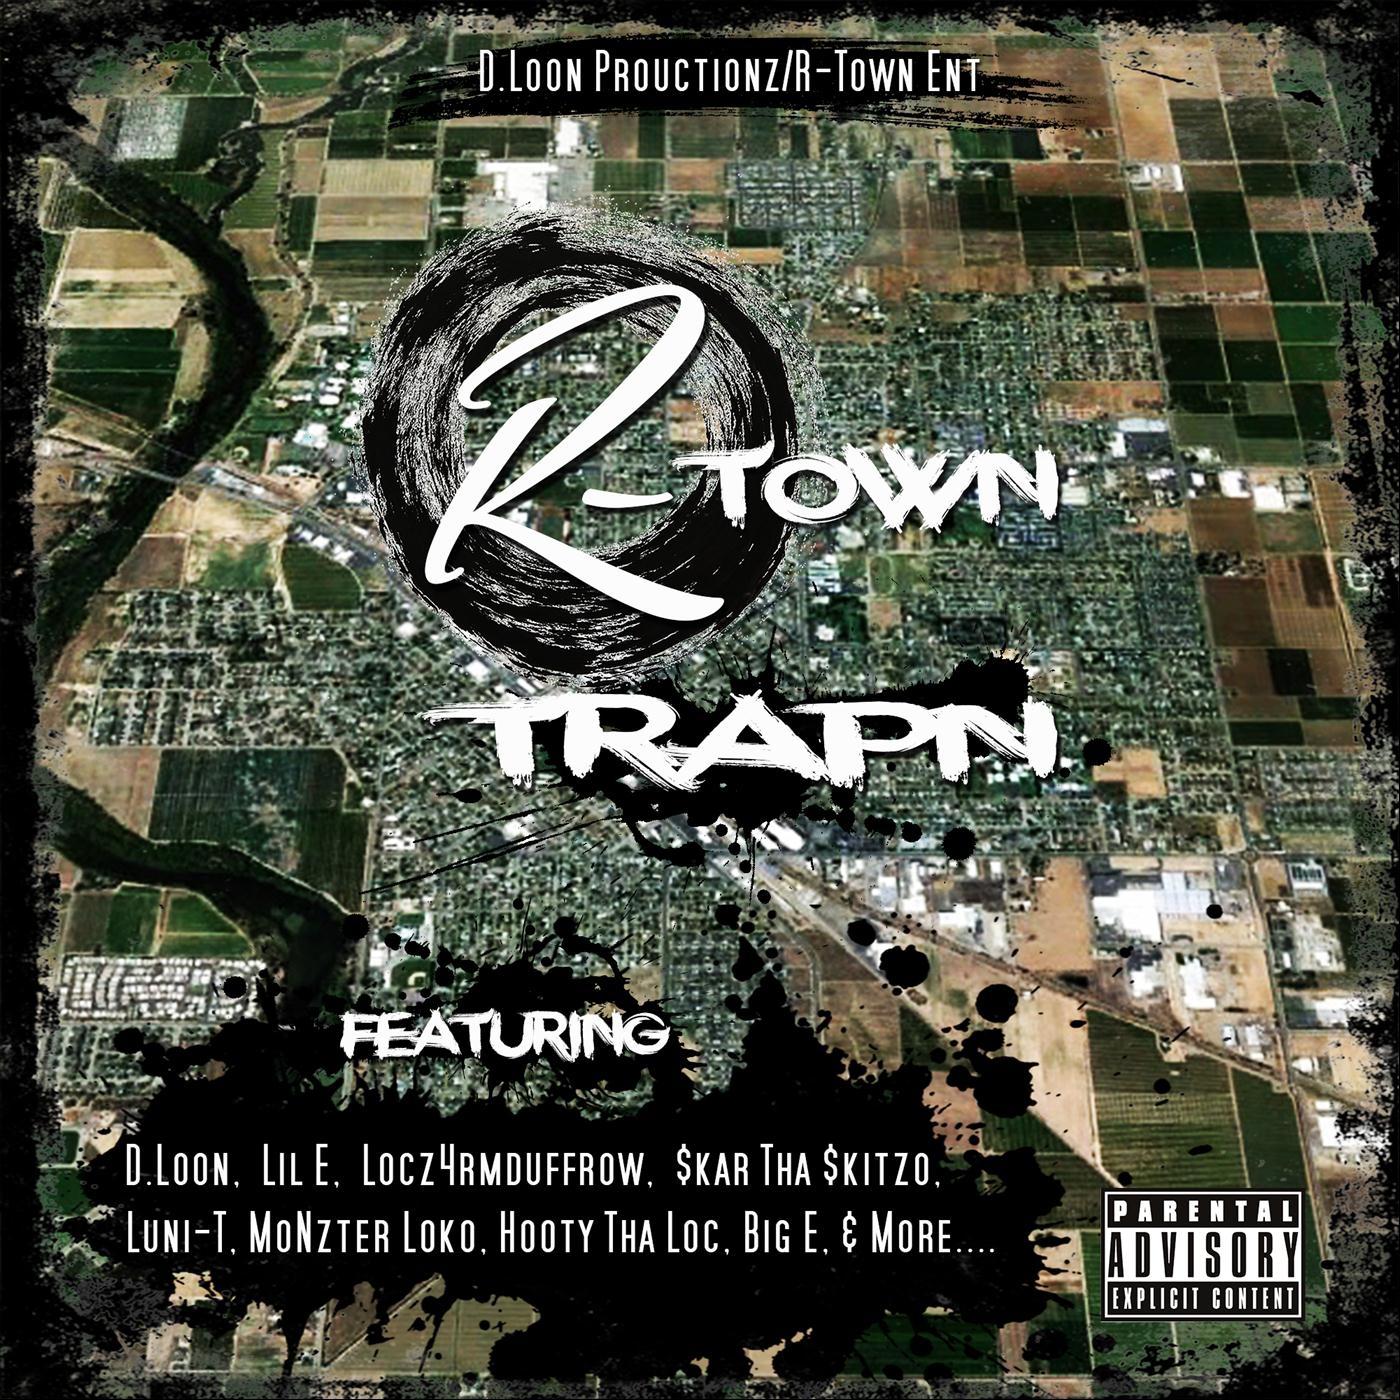 R-Town Trapn